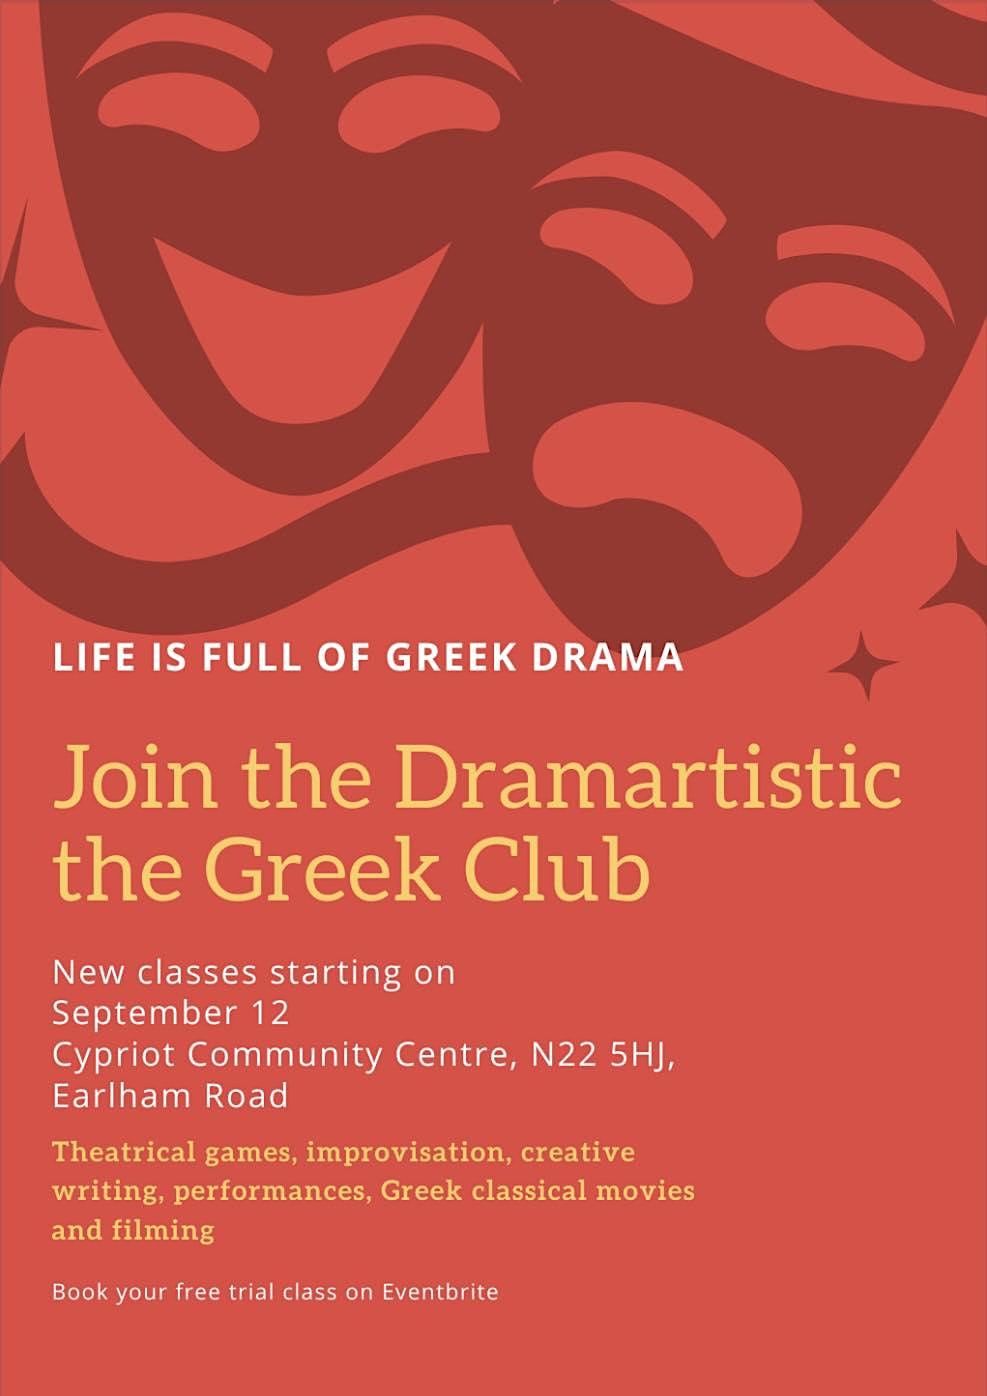 Greek Drama Classes